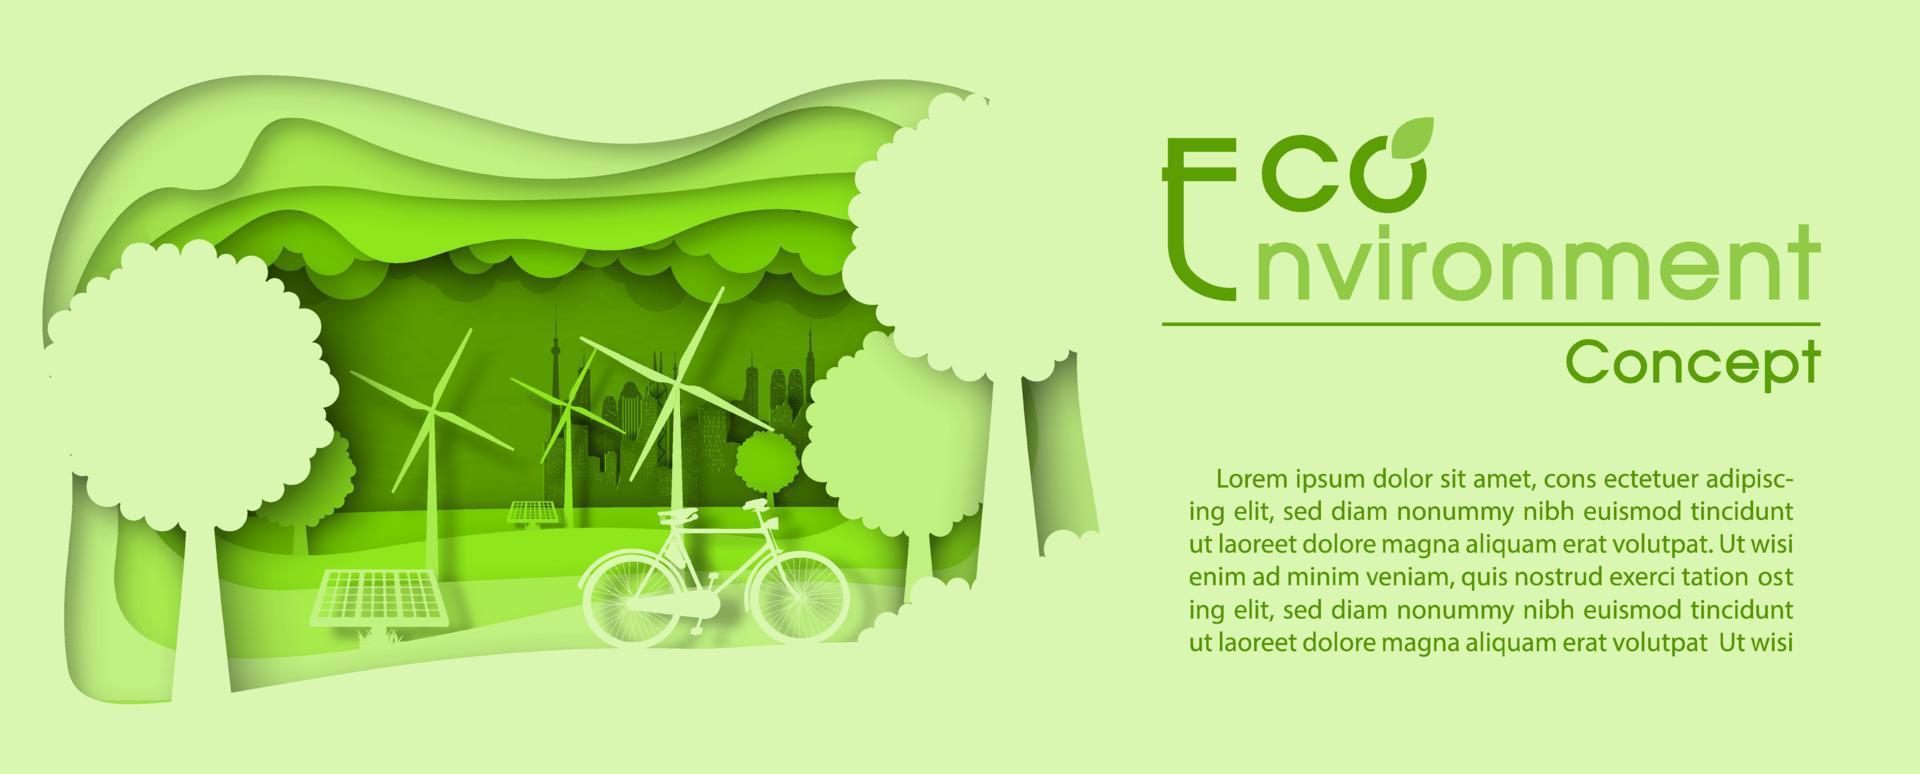 mundo meio Ambiente e economia conceitos poster campanha dentro papel cortar estilo e bandeira vetor Projeto.